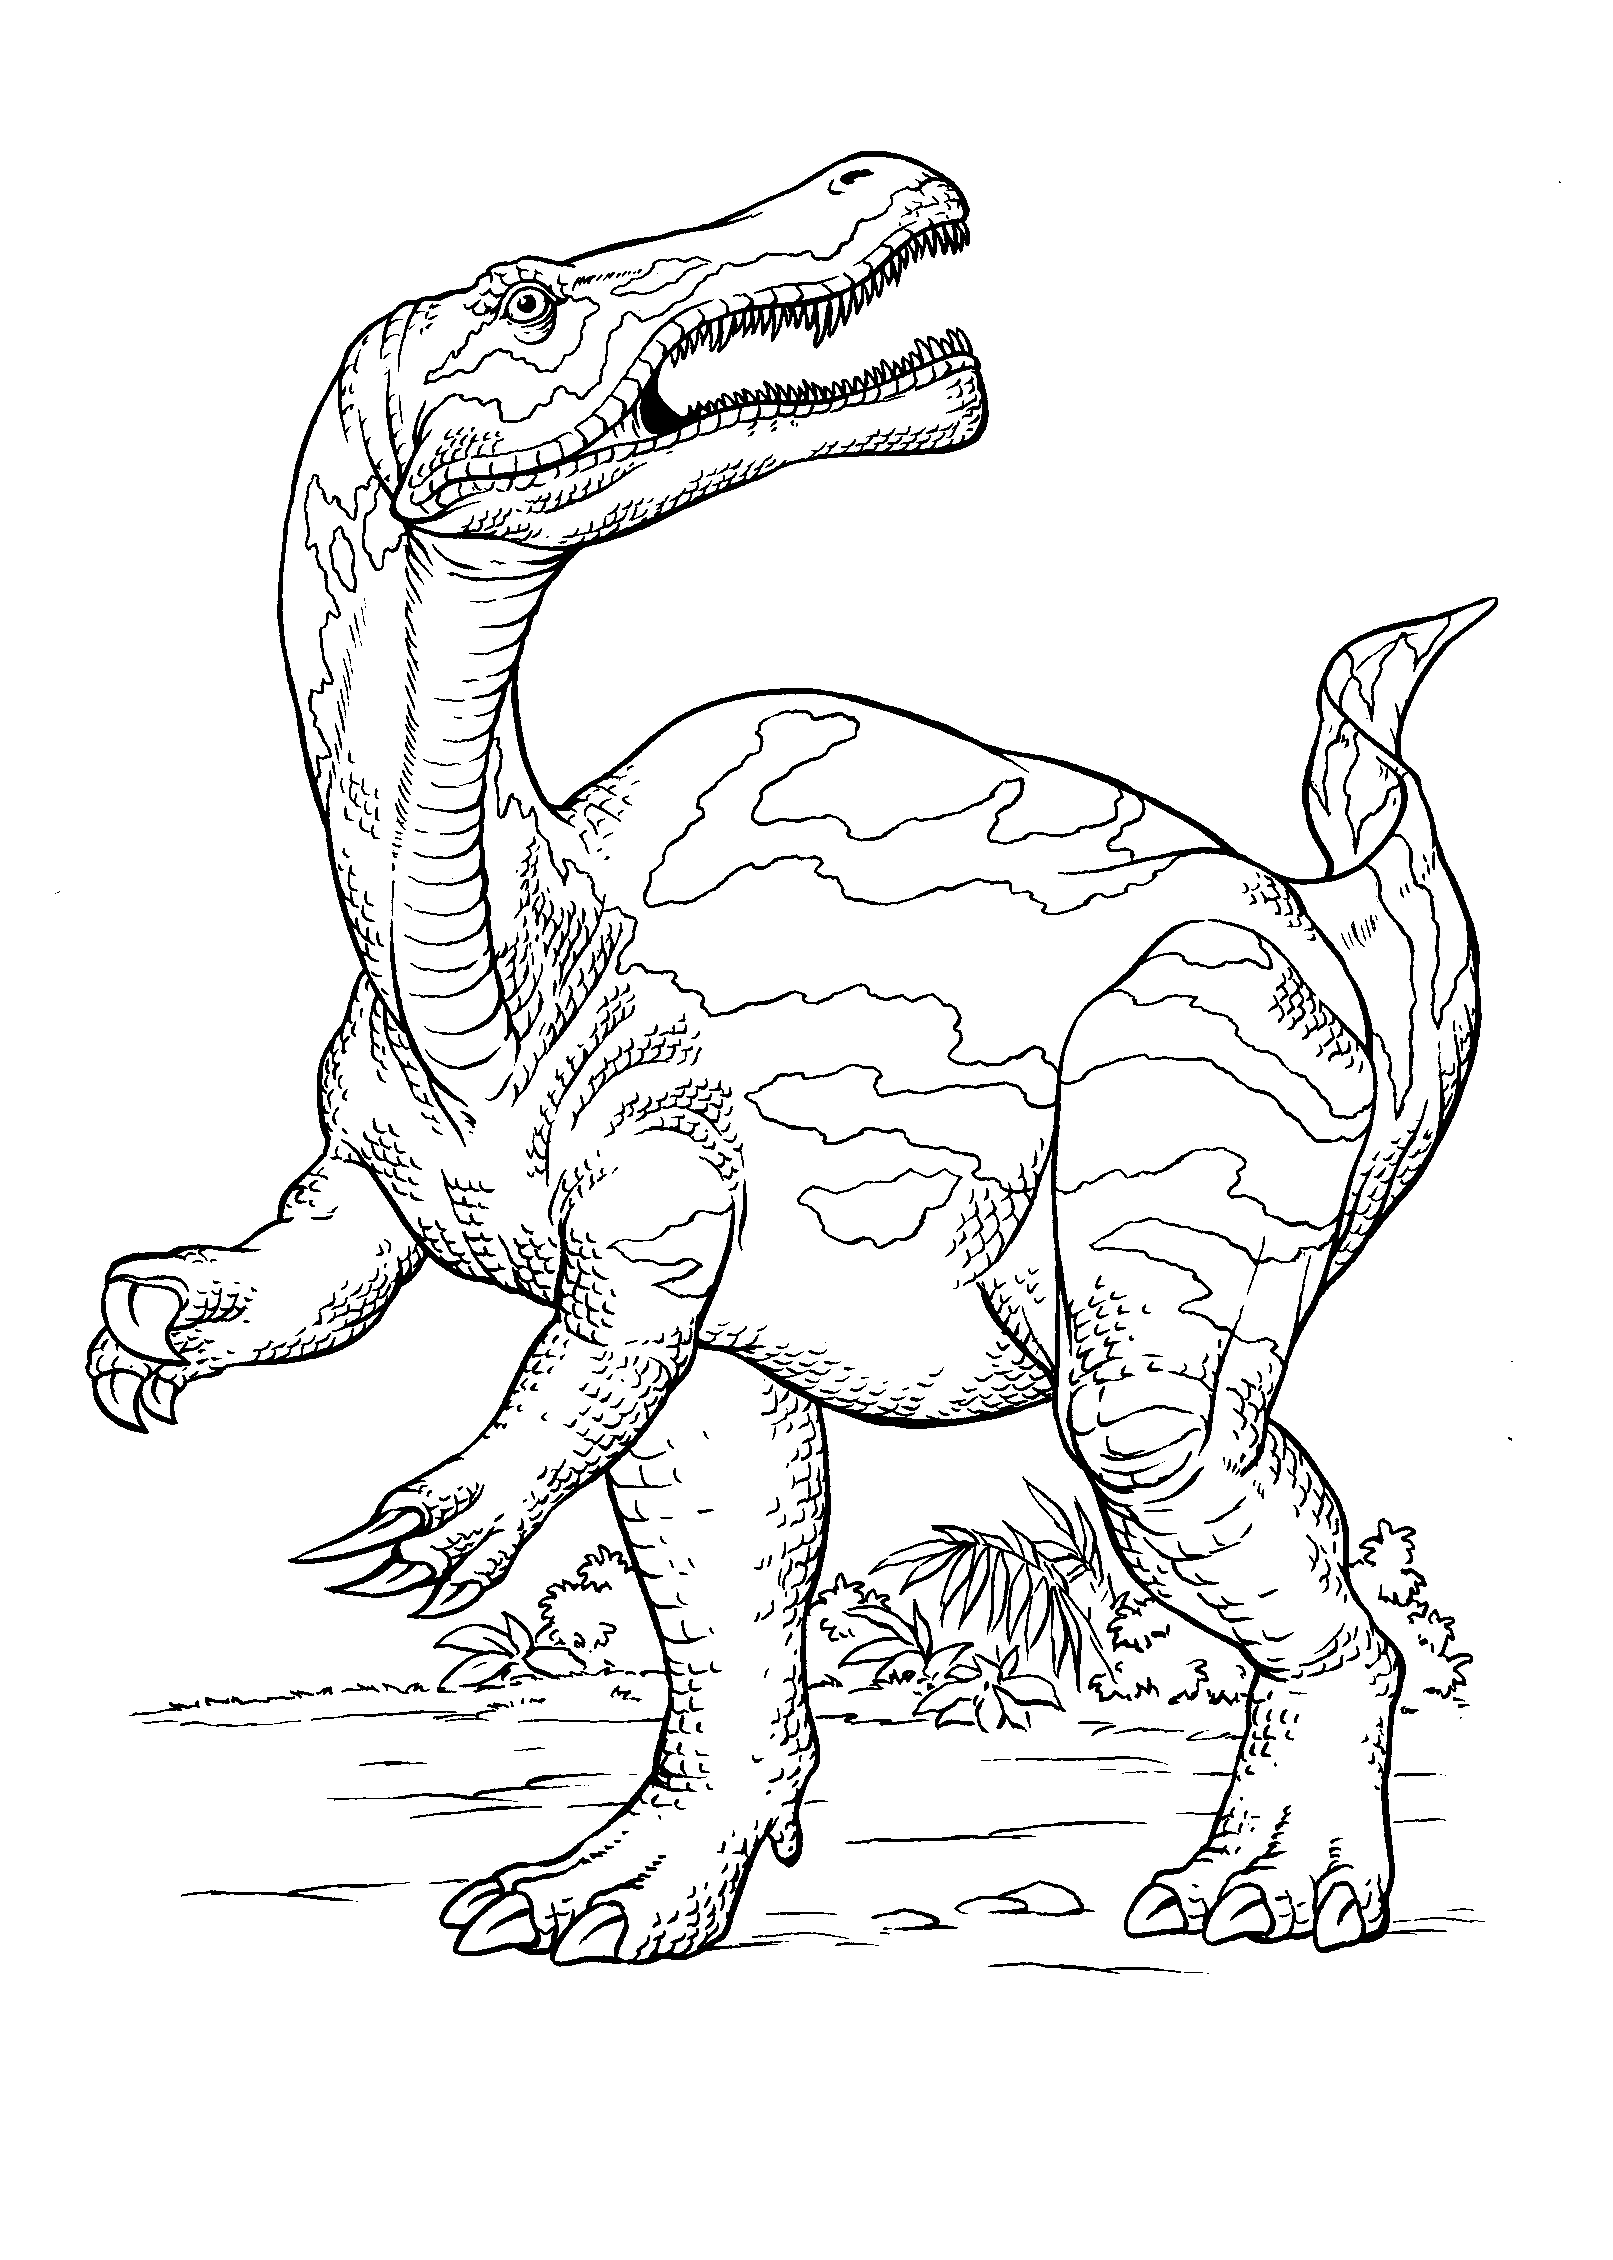 Coloring page - Dinosaur hunting